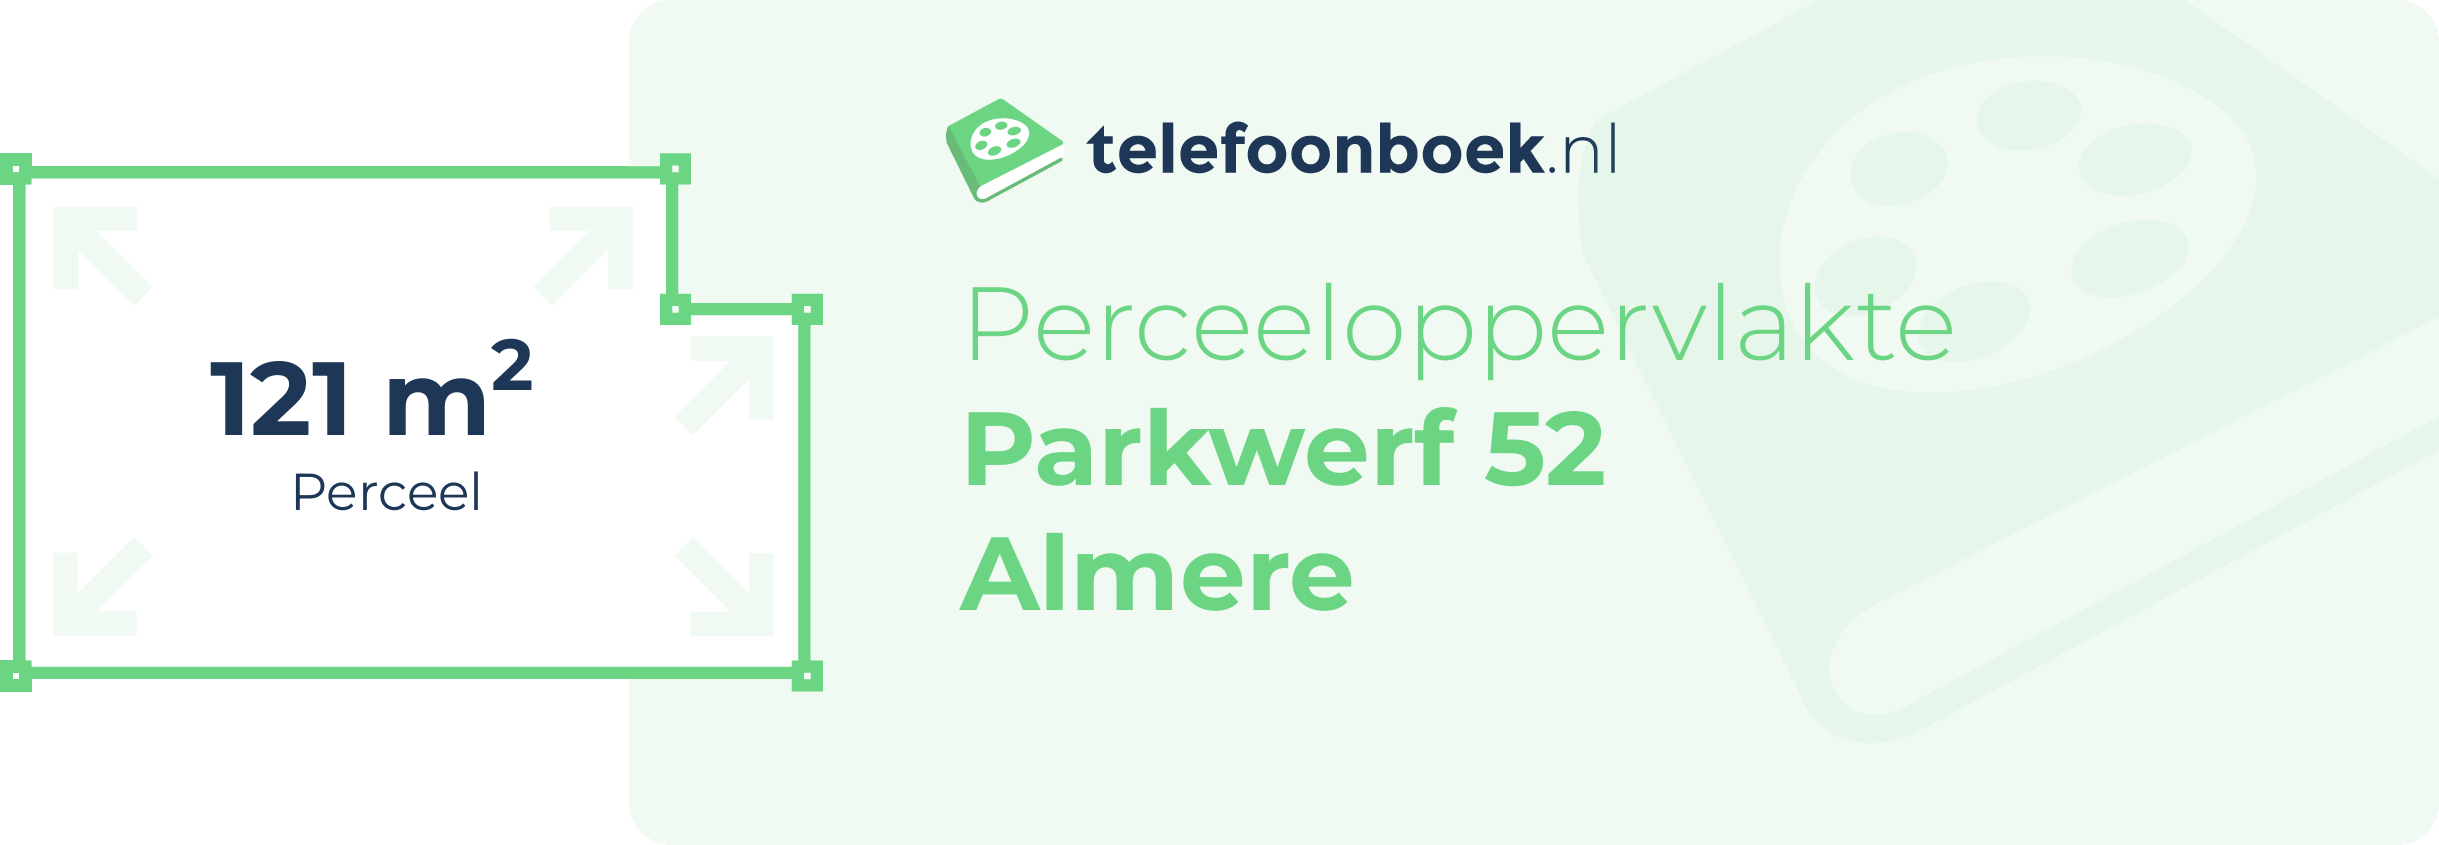 Perceeloppervlakte Parkwerf 52 Almere